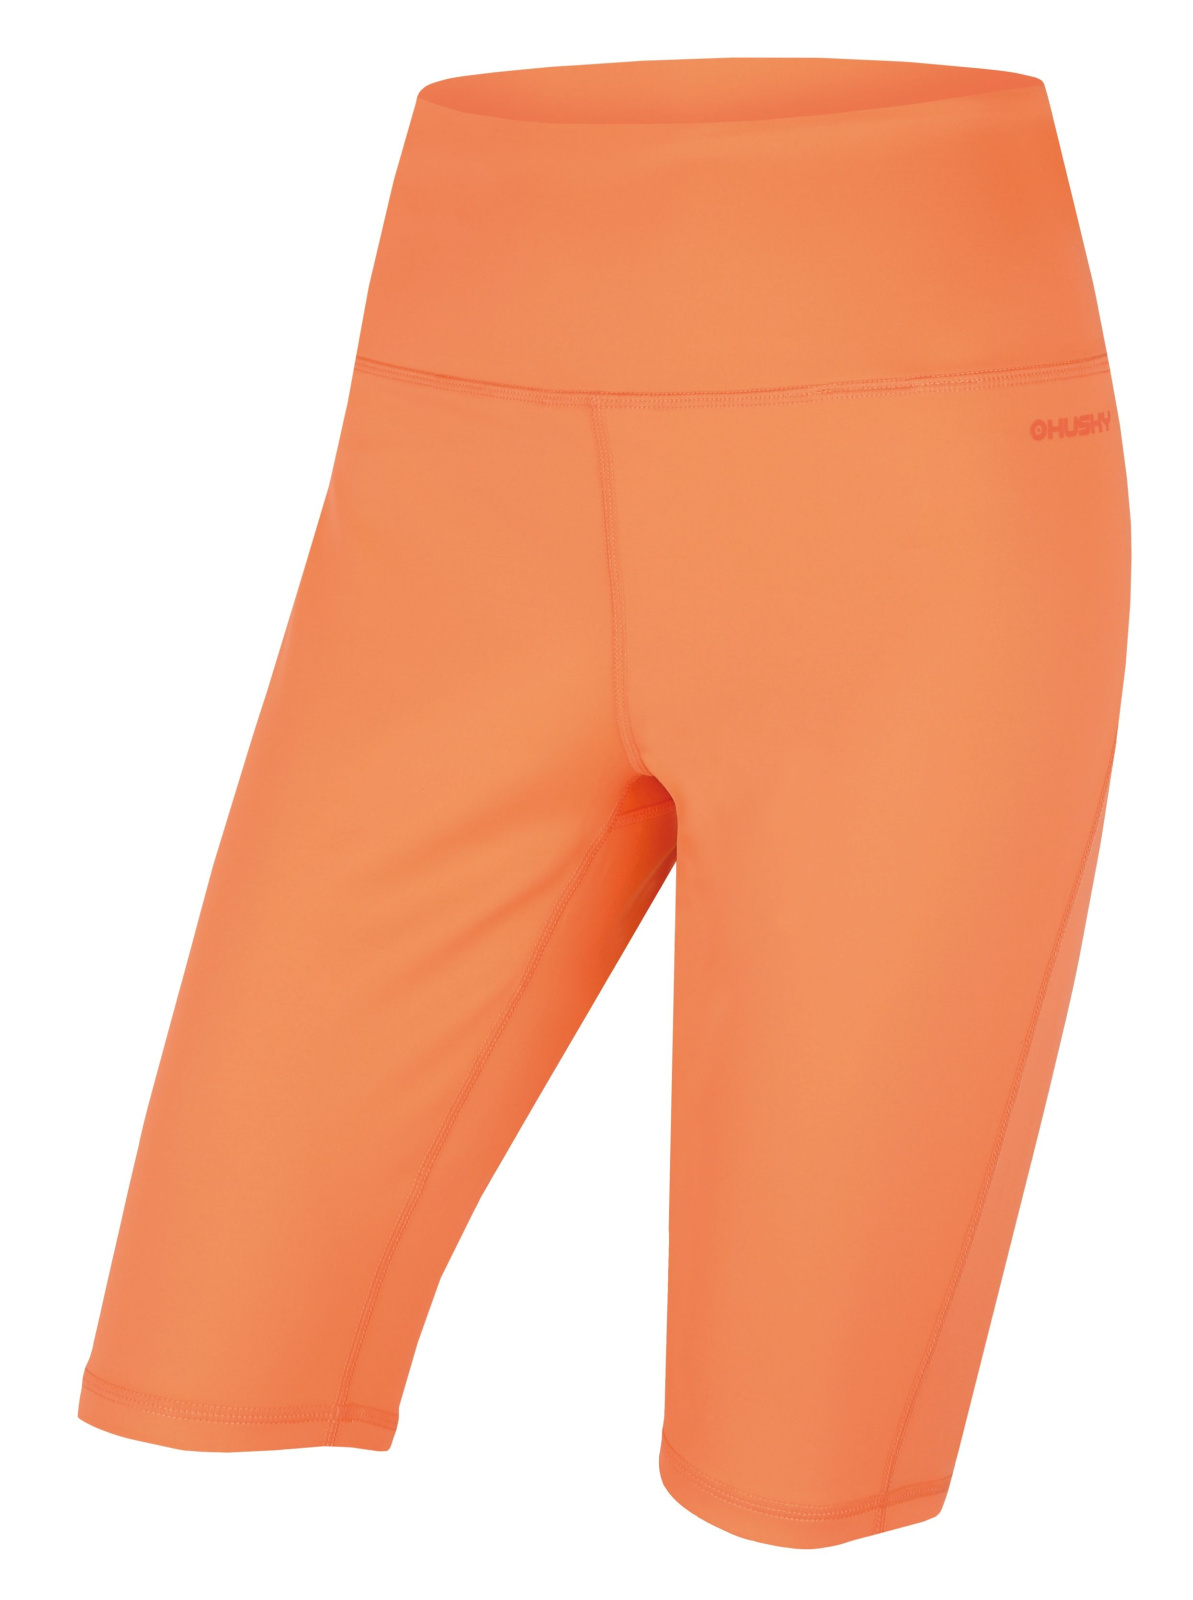 Women's running shorts HUSKY Dalu L light orange